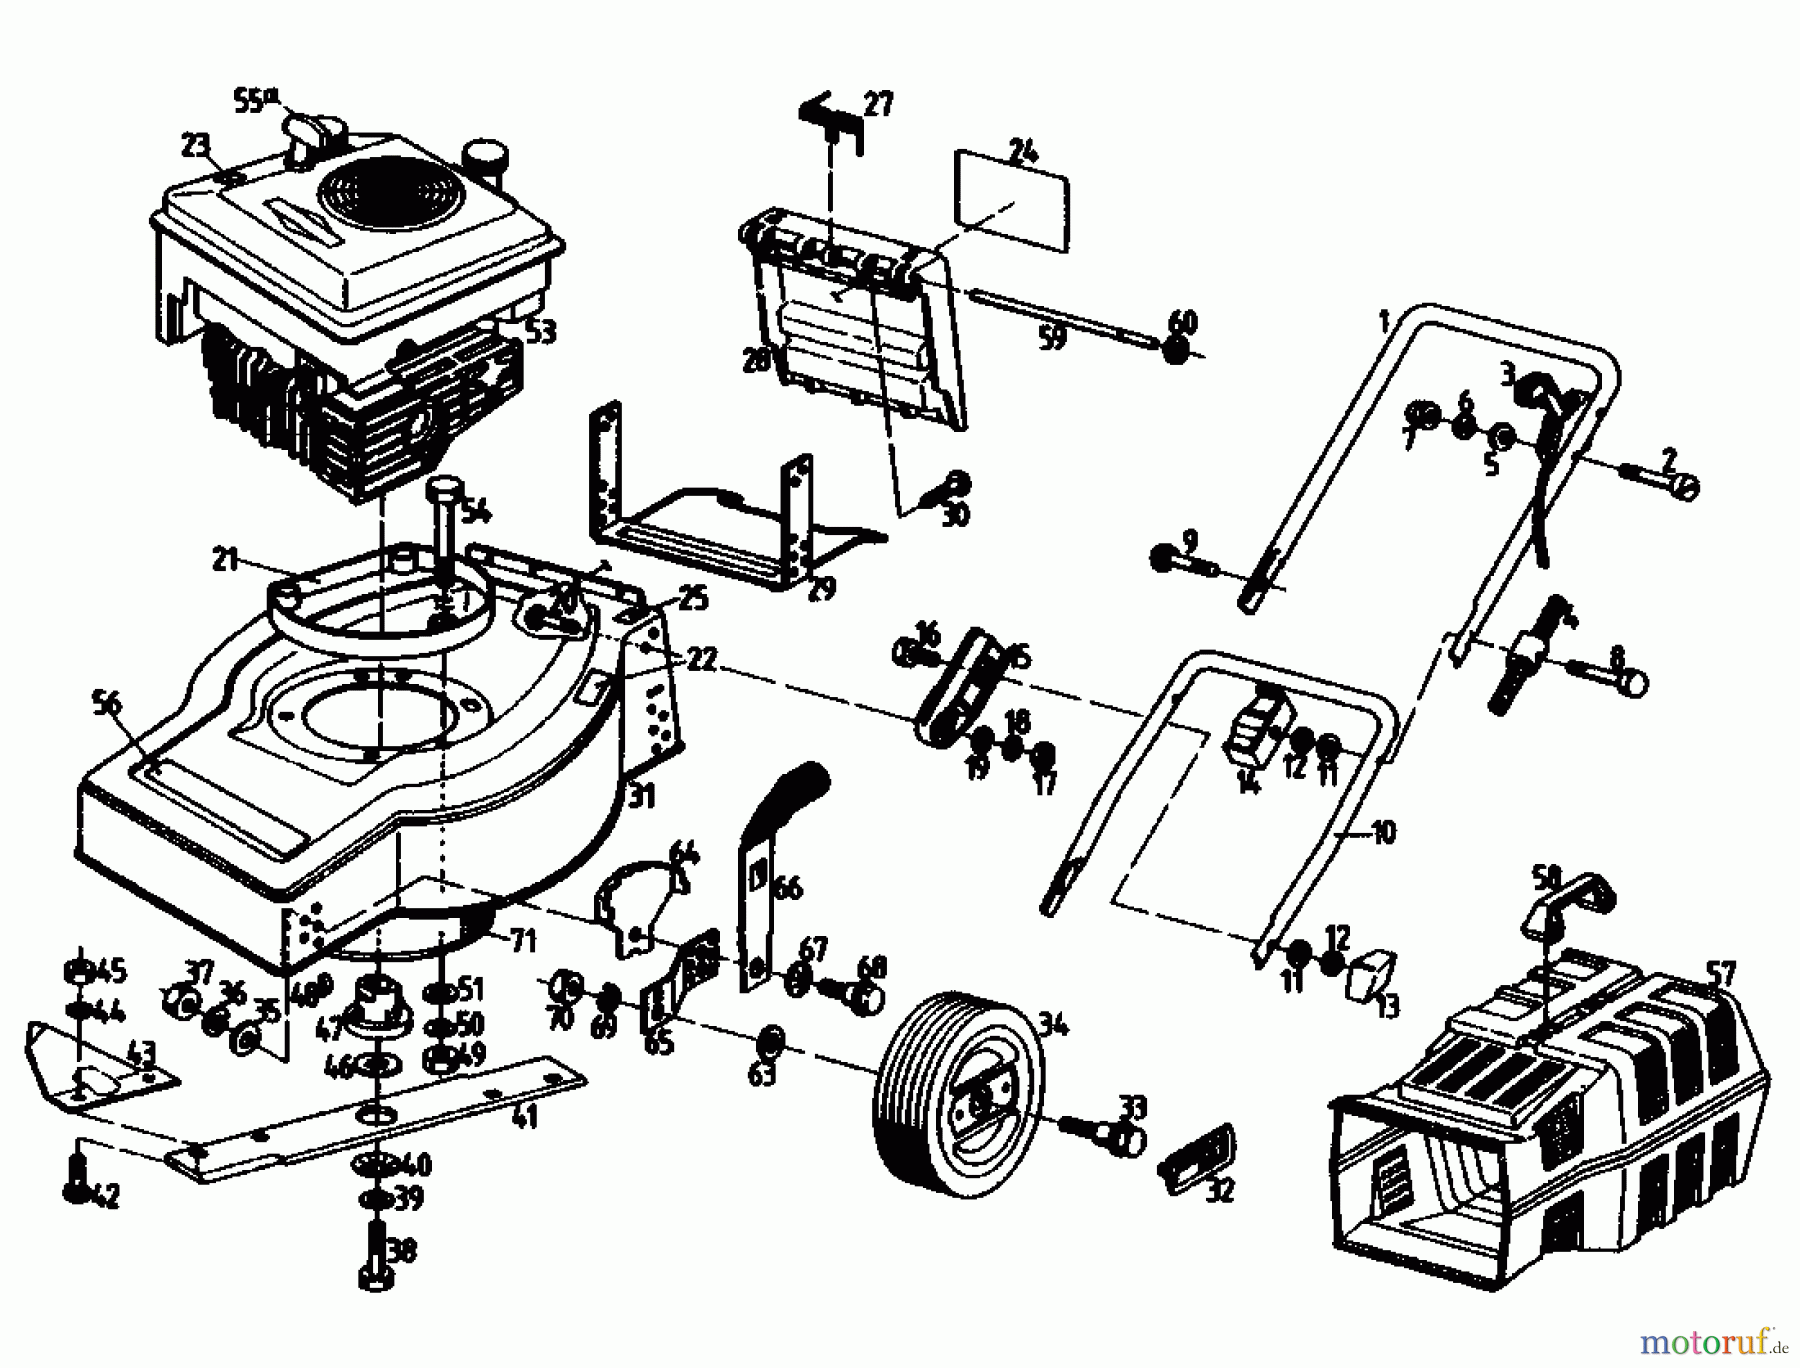  Gutbrod Petrol mower TURBO B-Q 02893.03  (1989) Basic machine